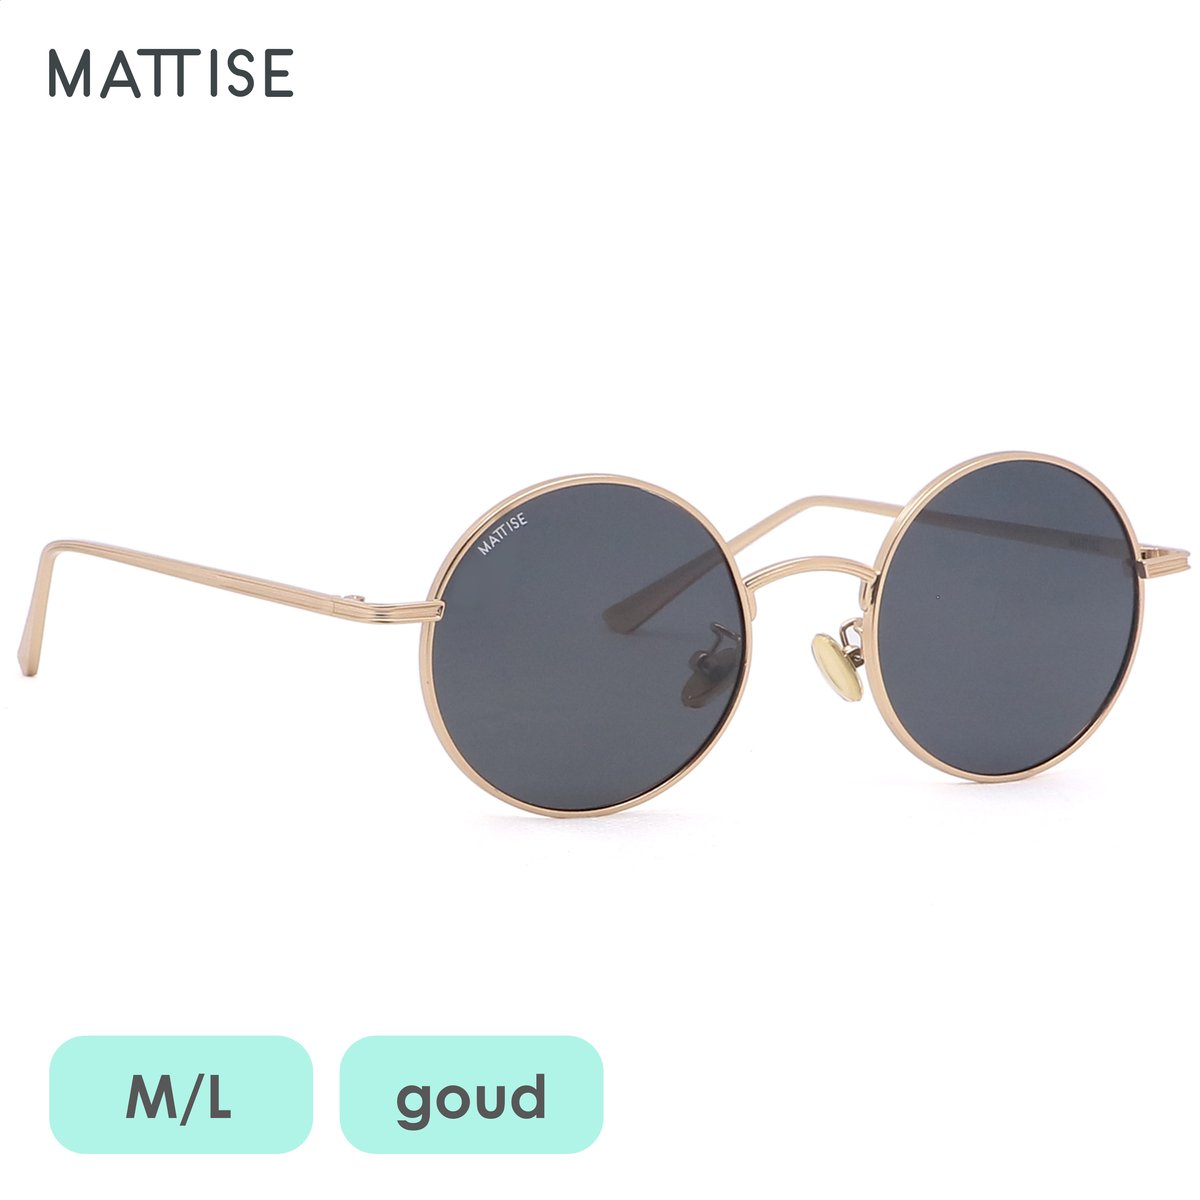 MATTISE Goud Unisex Gepolariseerde Zonnebril van Staal — M/L Zonnebril Heren Dames — Hippie Bril Gepolariseerd — Zonnebrillen Brillen